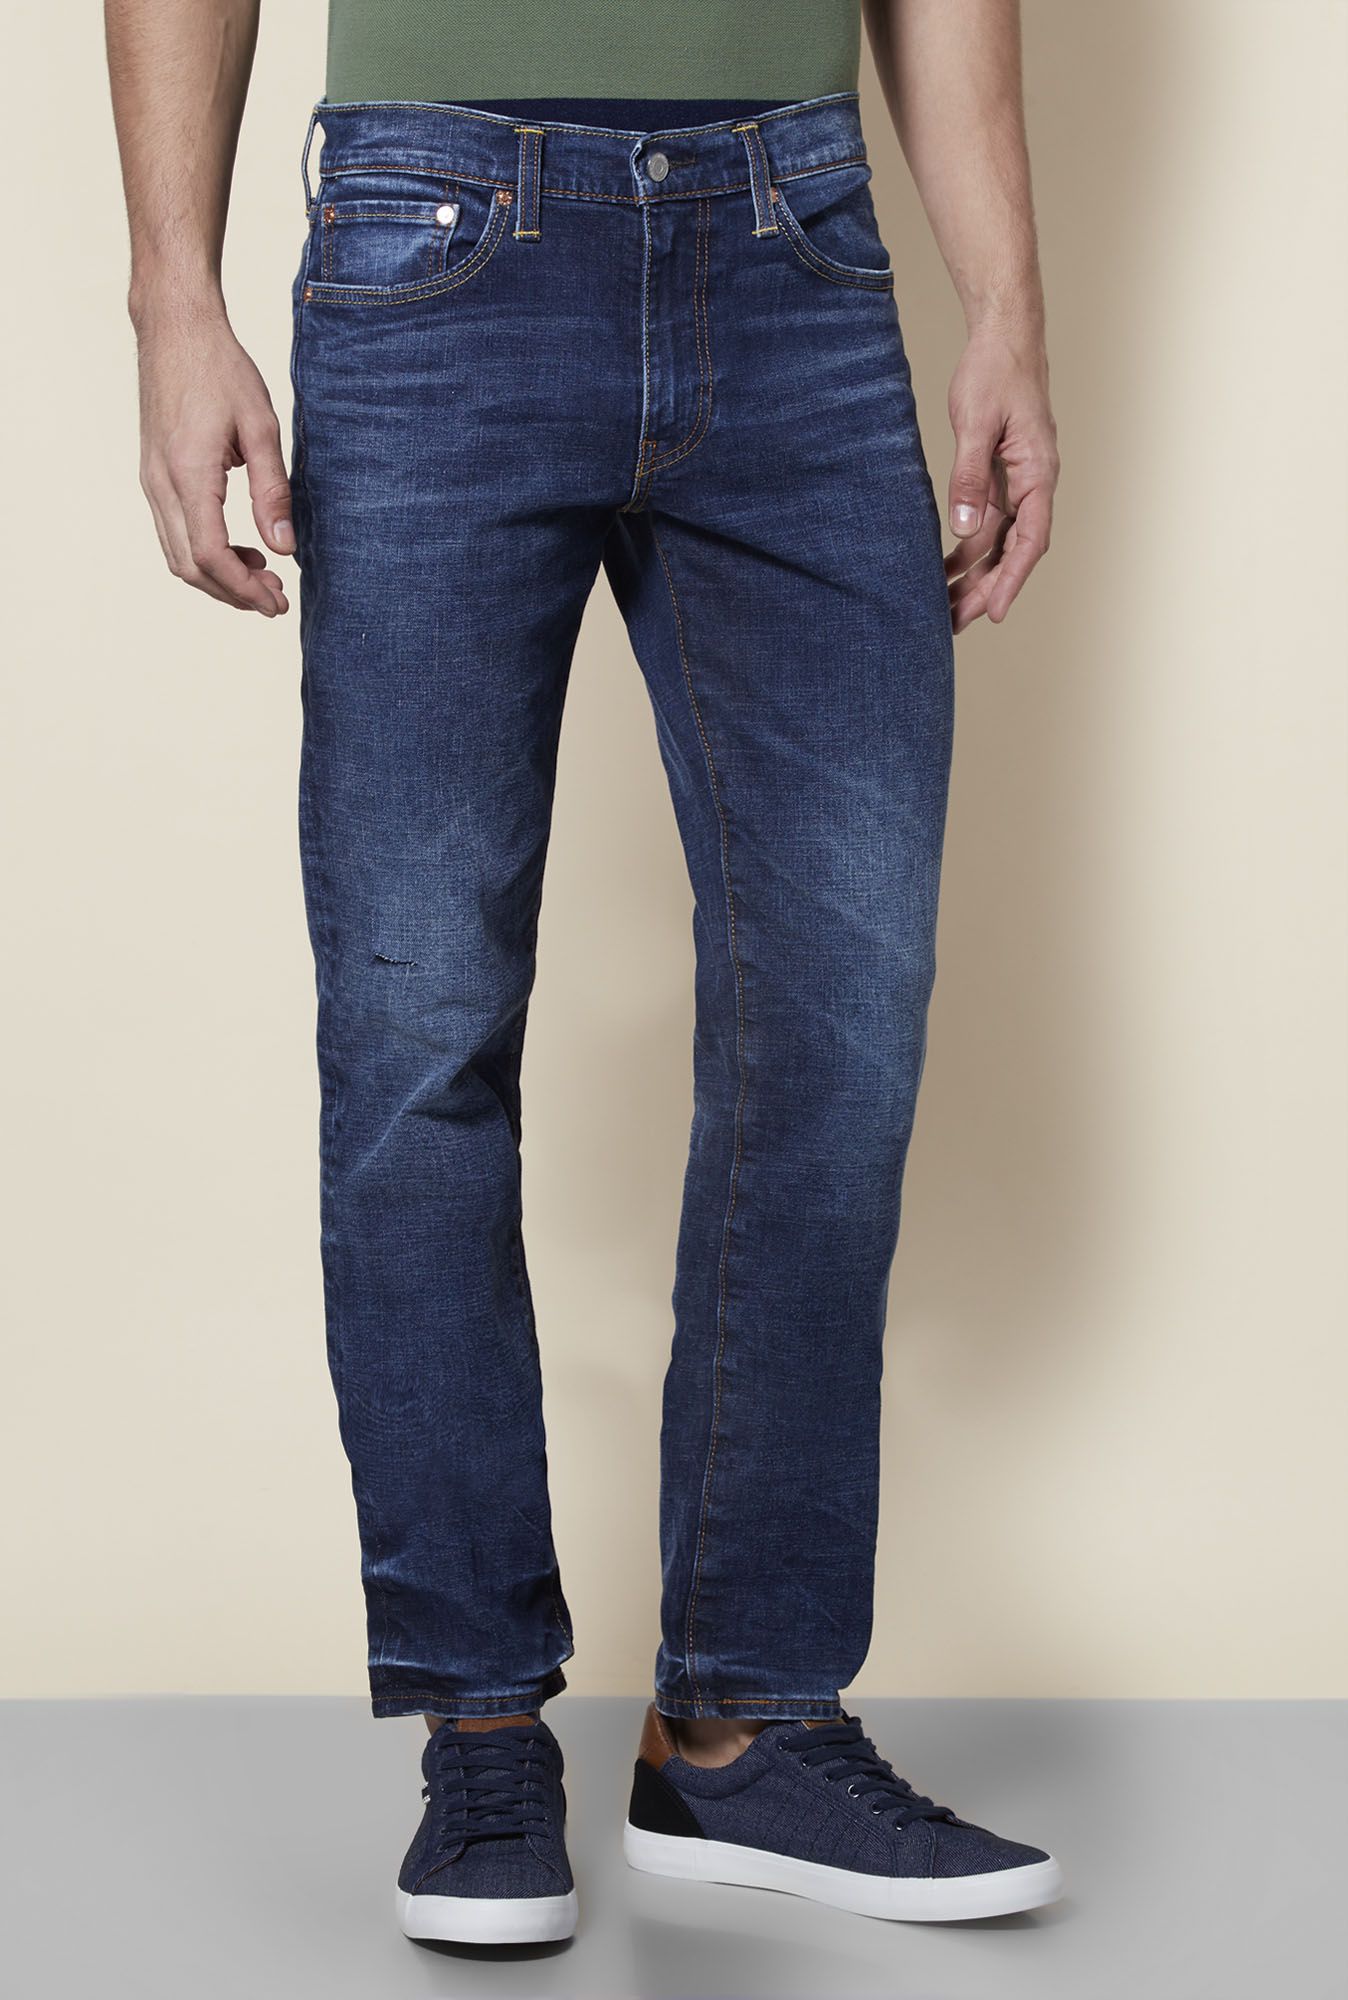 Levi's Blue Regular Fit Jeans - Buy Levi's Blue Regular Fit Jeans ...